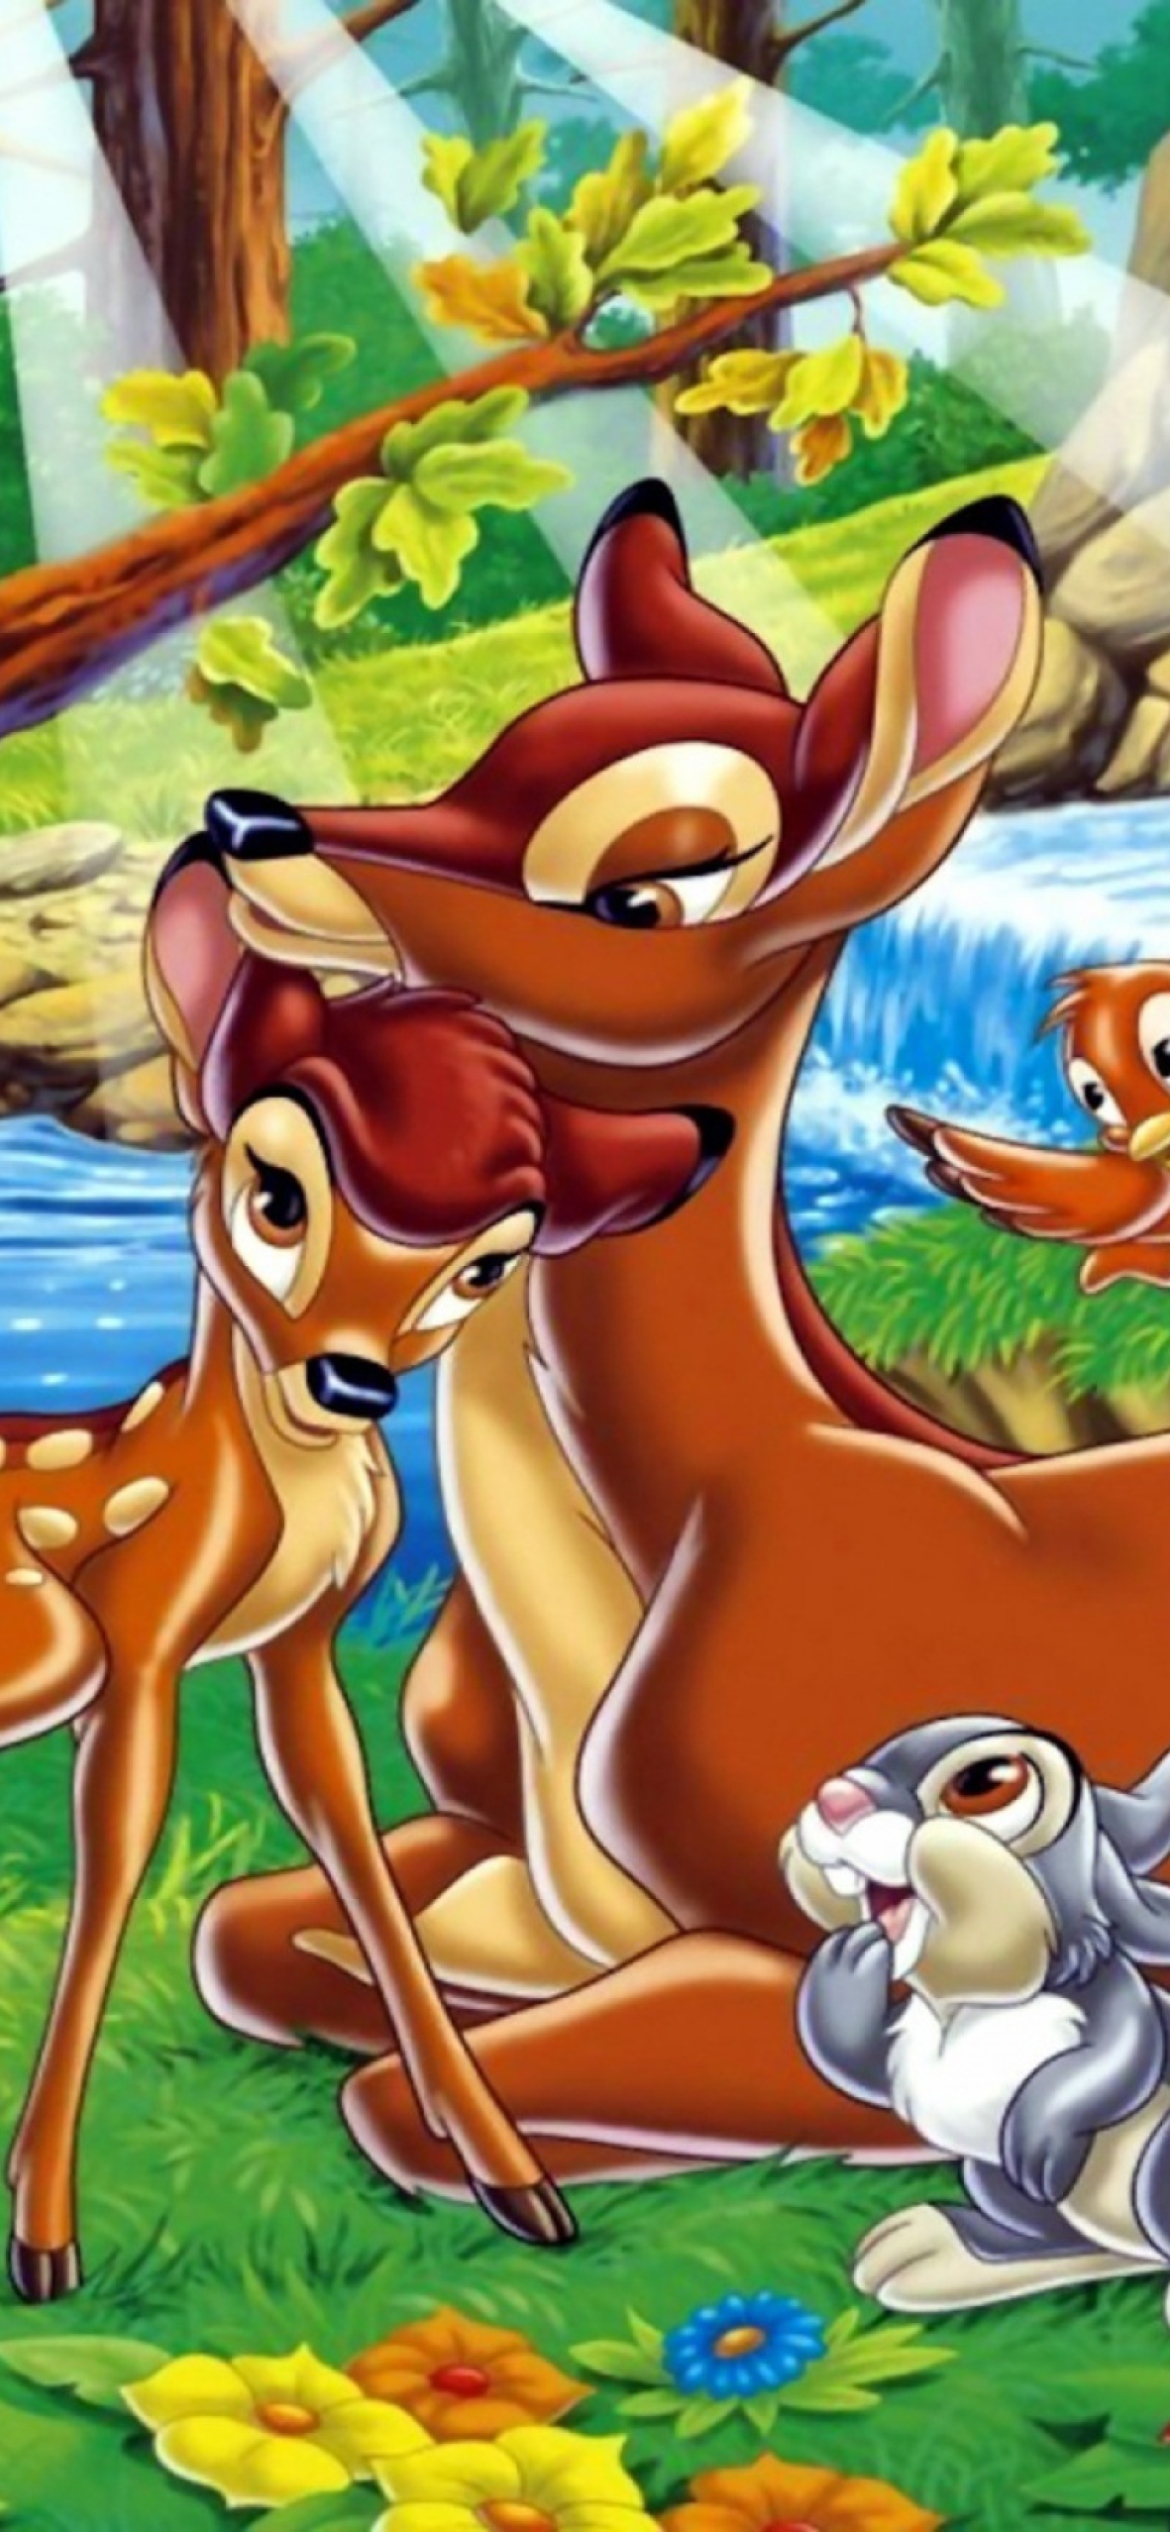 Disney Bambi - Fondos de pantalla gratis para iPhone 11 Pro